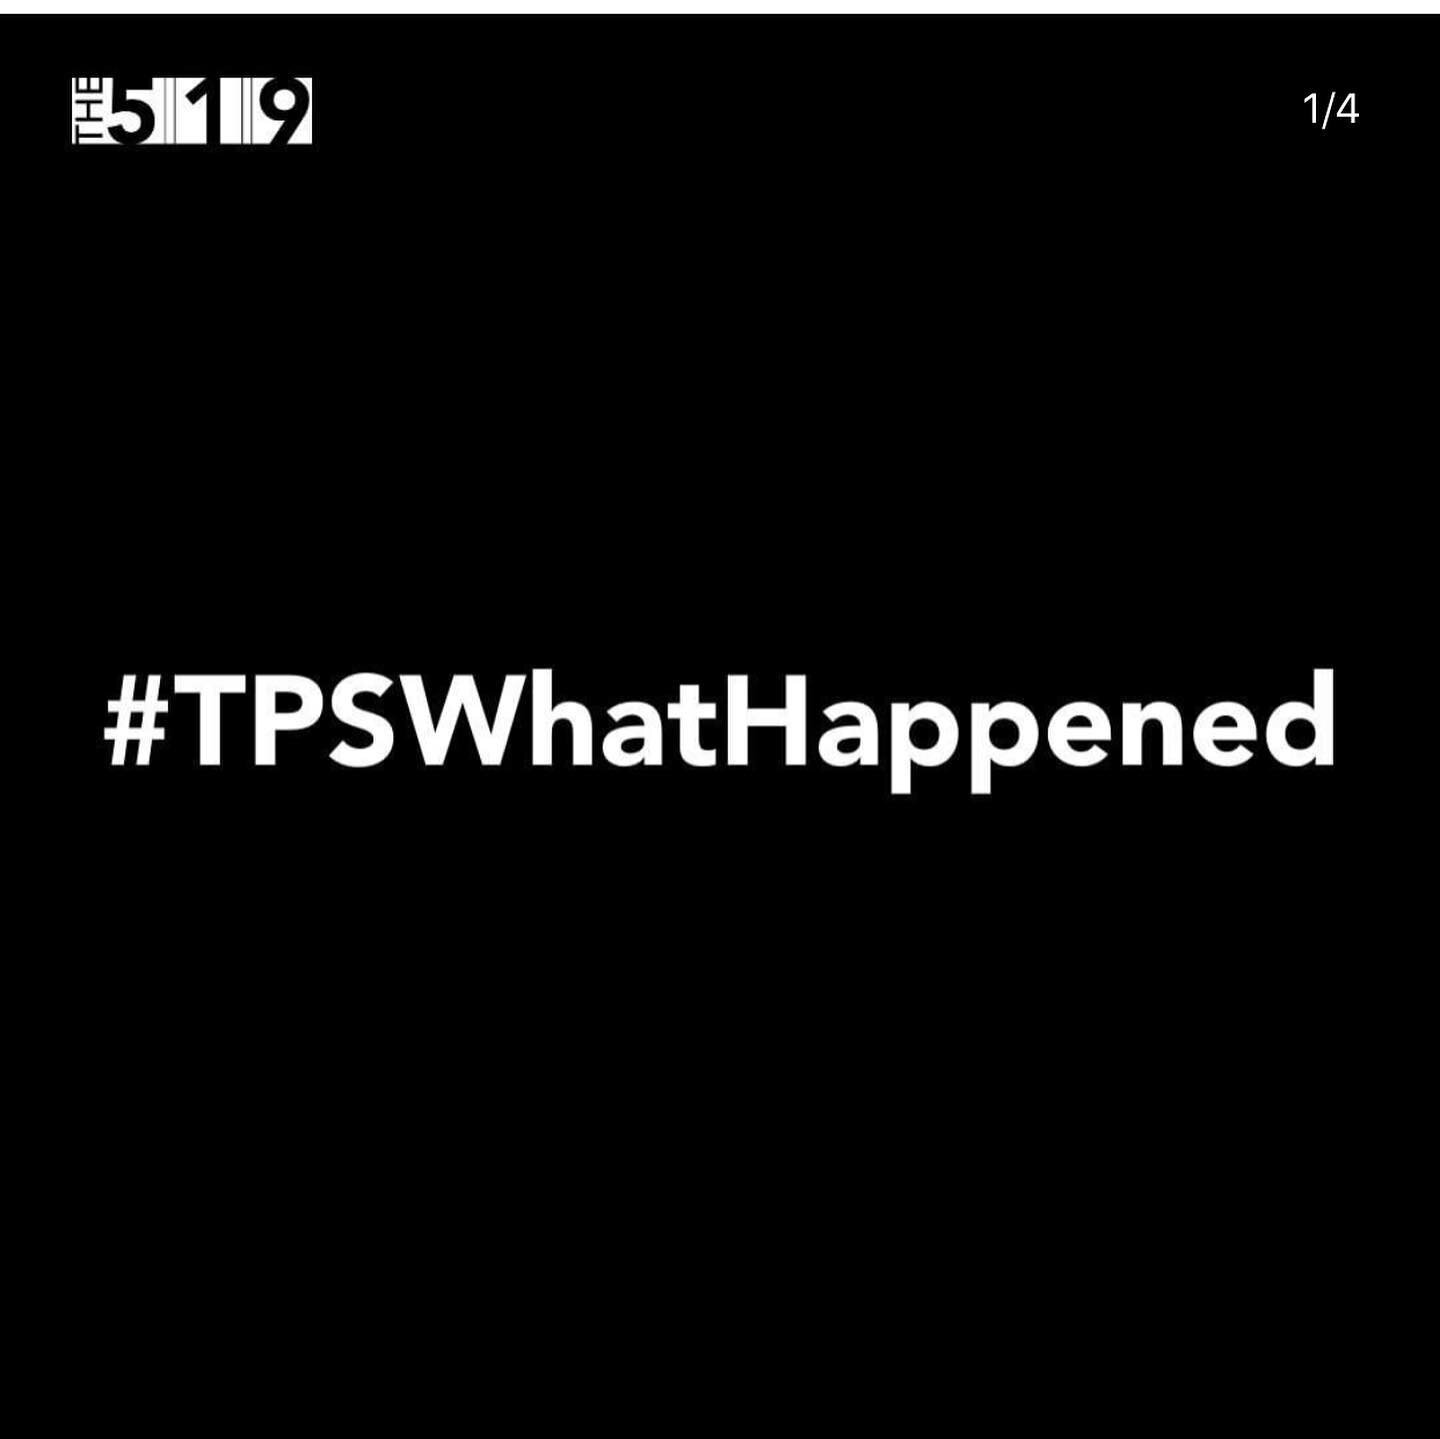 #tpswhathappened Still waiting #toronto #ontario #weareasking #peoplewanttoknow #defundpolice #reformpolice